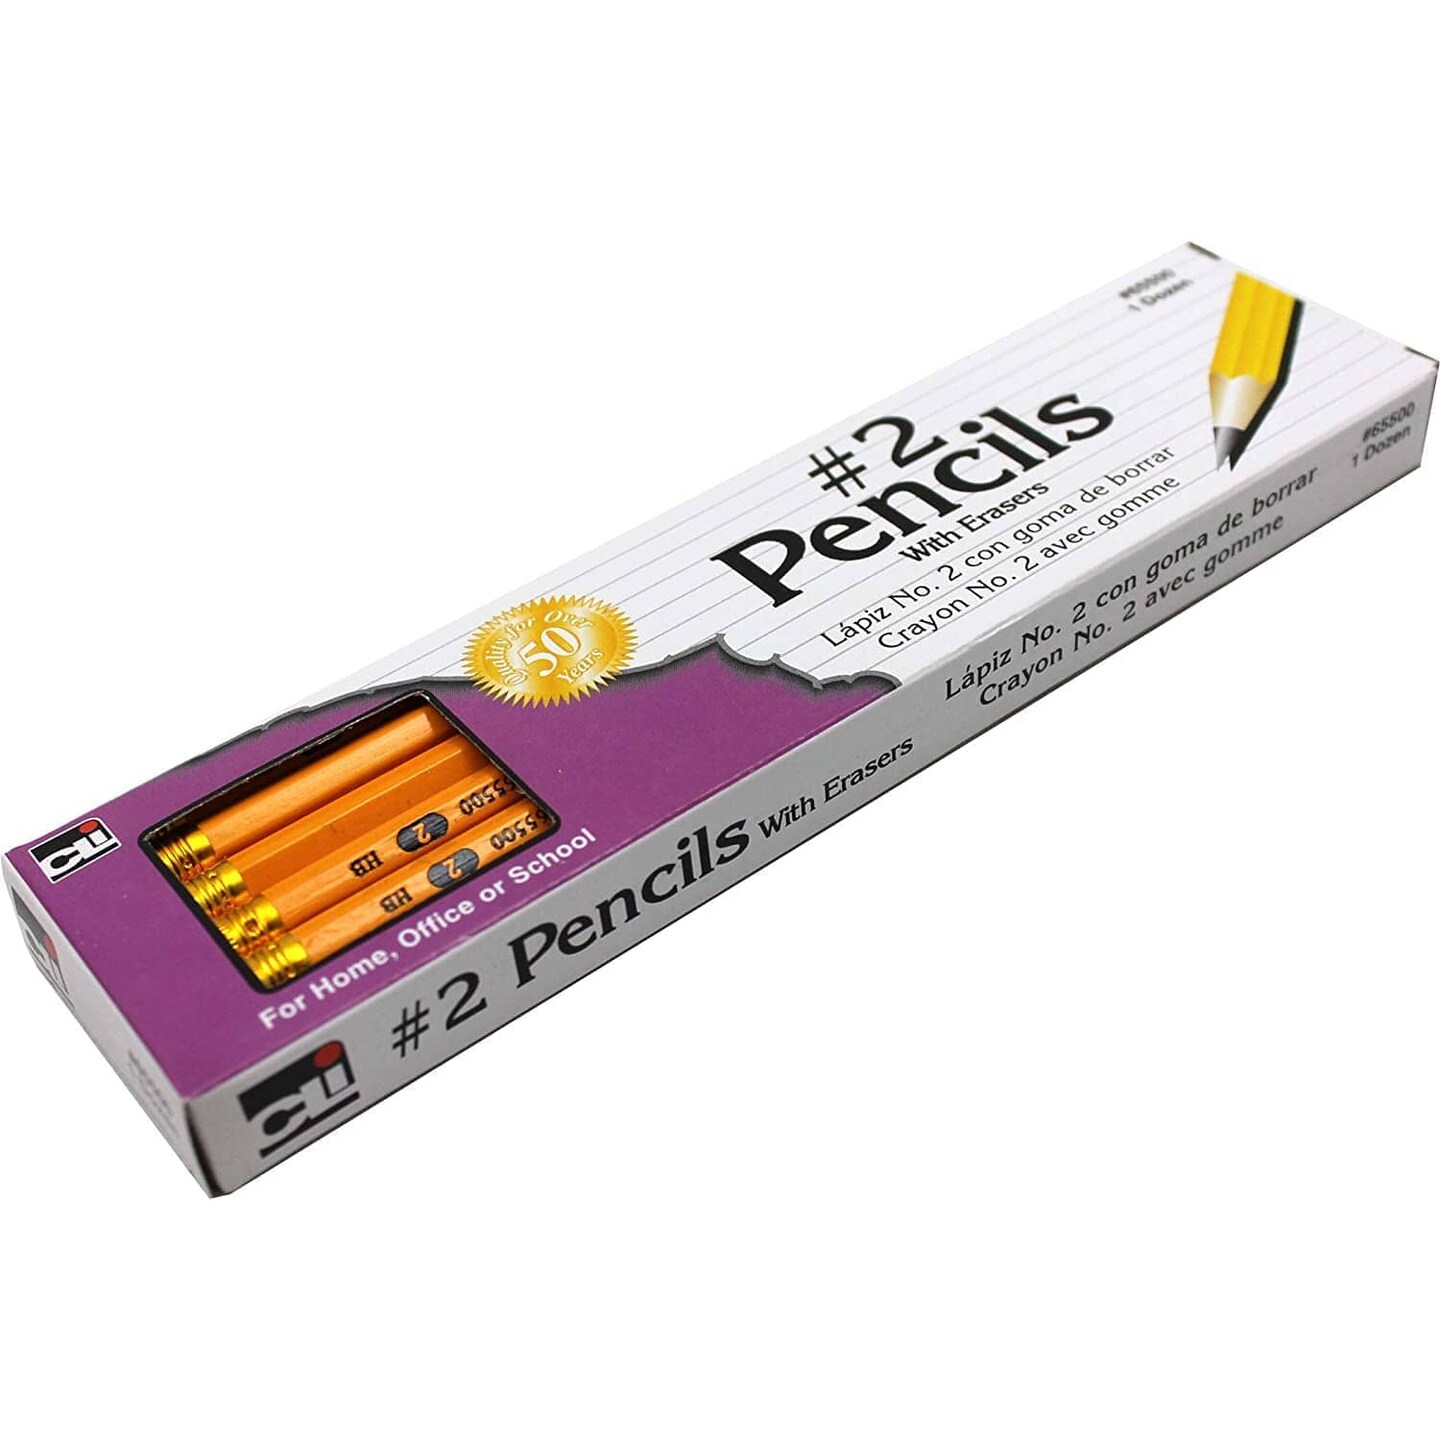 Pencil - #2 (12 Pack)